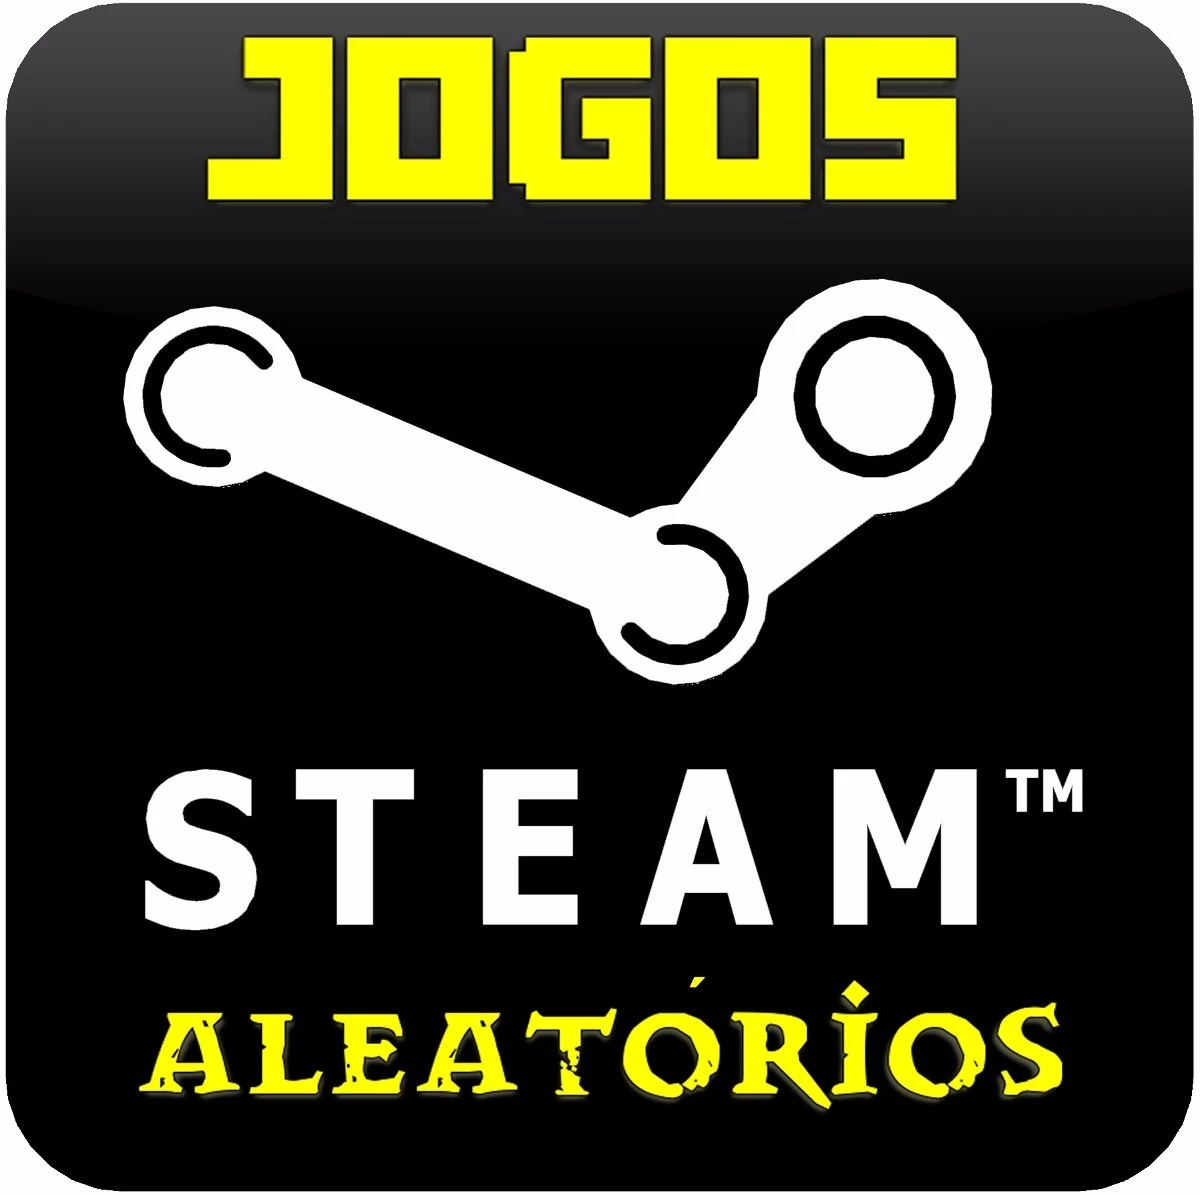 Hogwarts Legacy - Jogo Offline Steam + Brinde - Outros - DFG